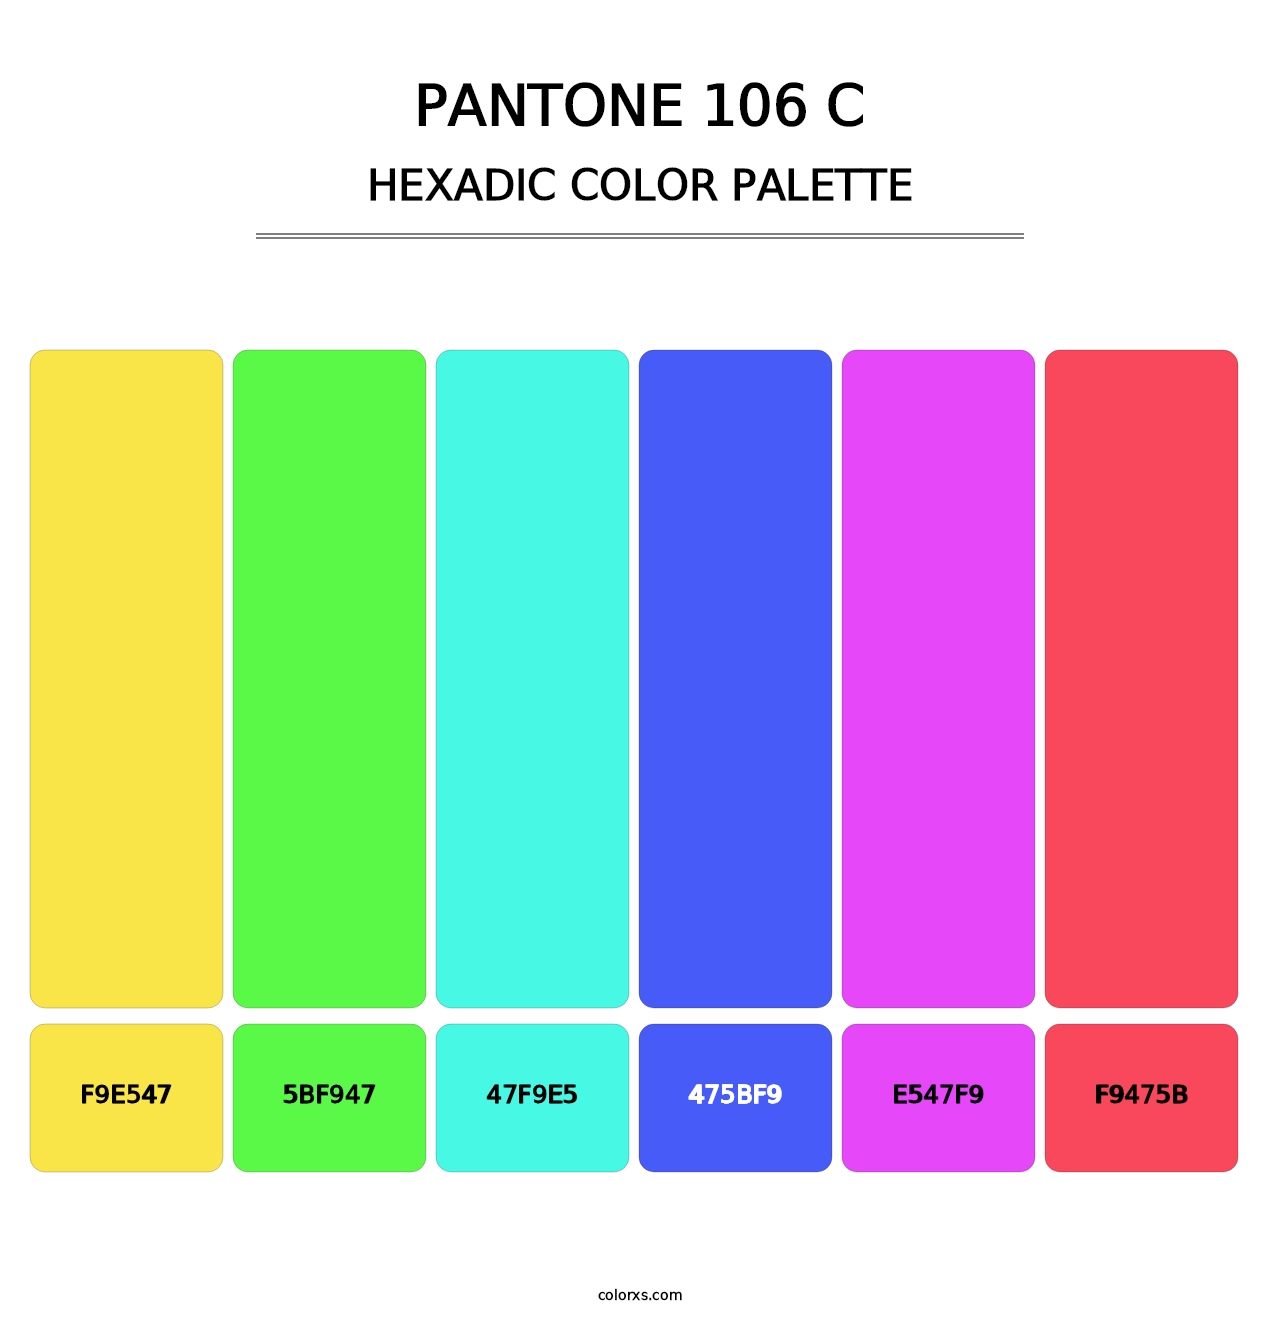 PANTONE 106 C - Hexadic Color Palette